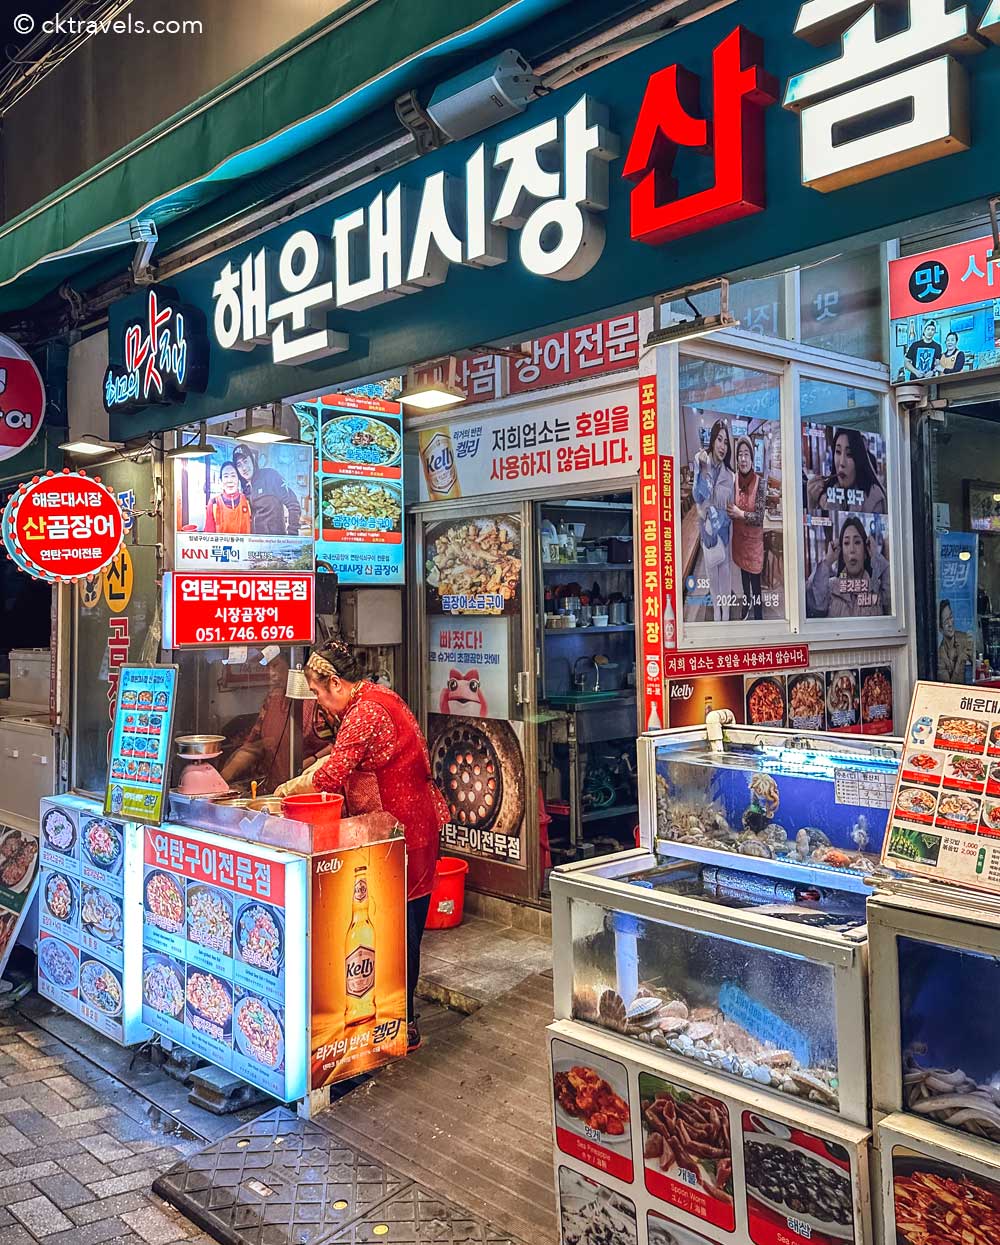 seafood restaurant at Haeundae Traditional Market - Busan's best food market